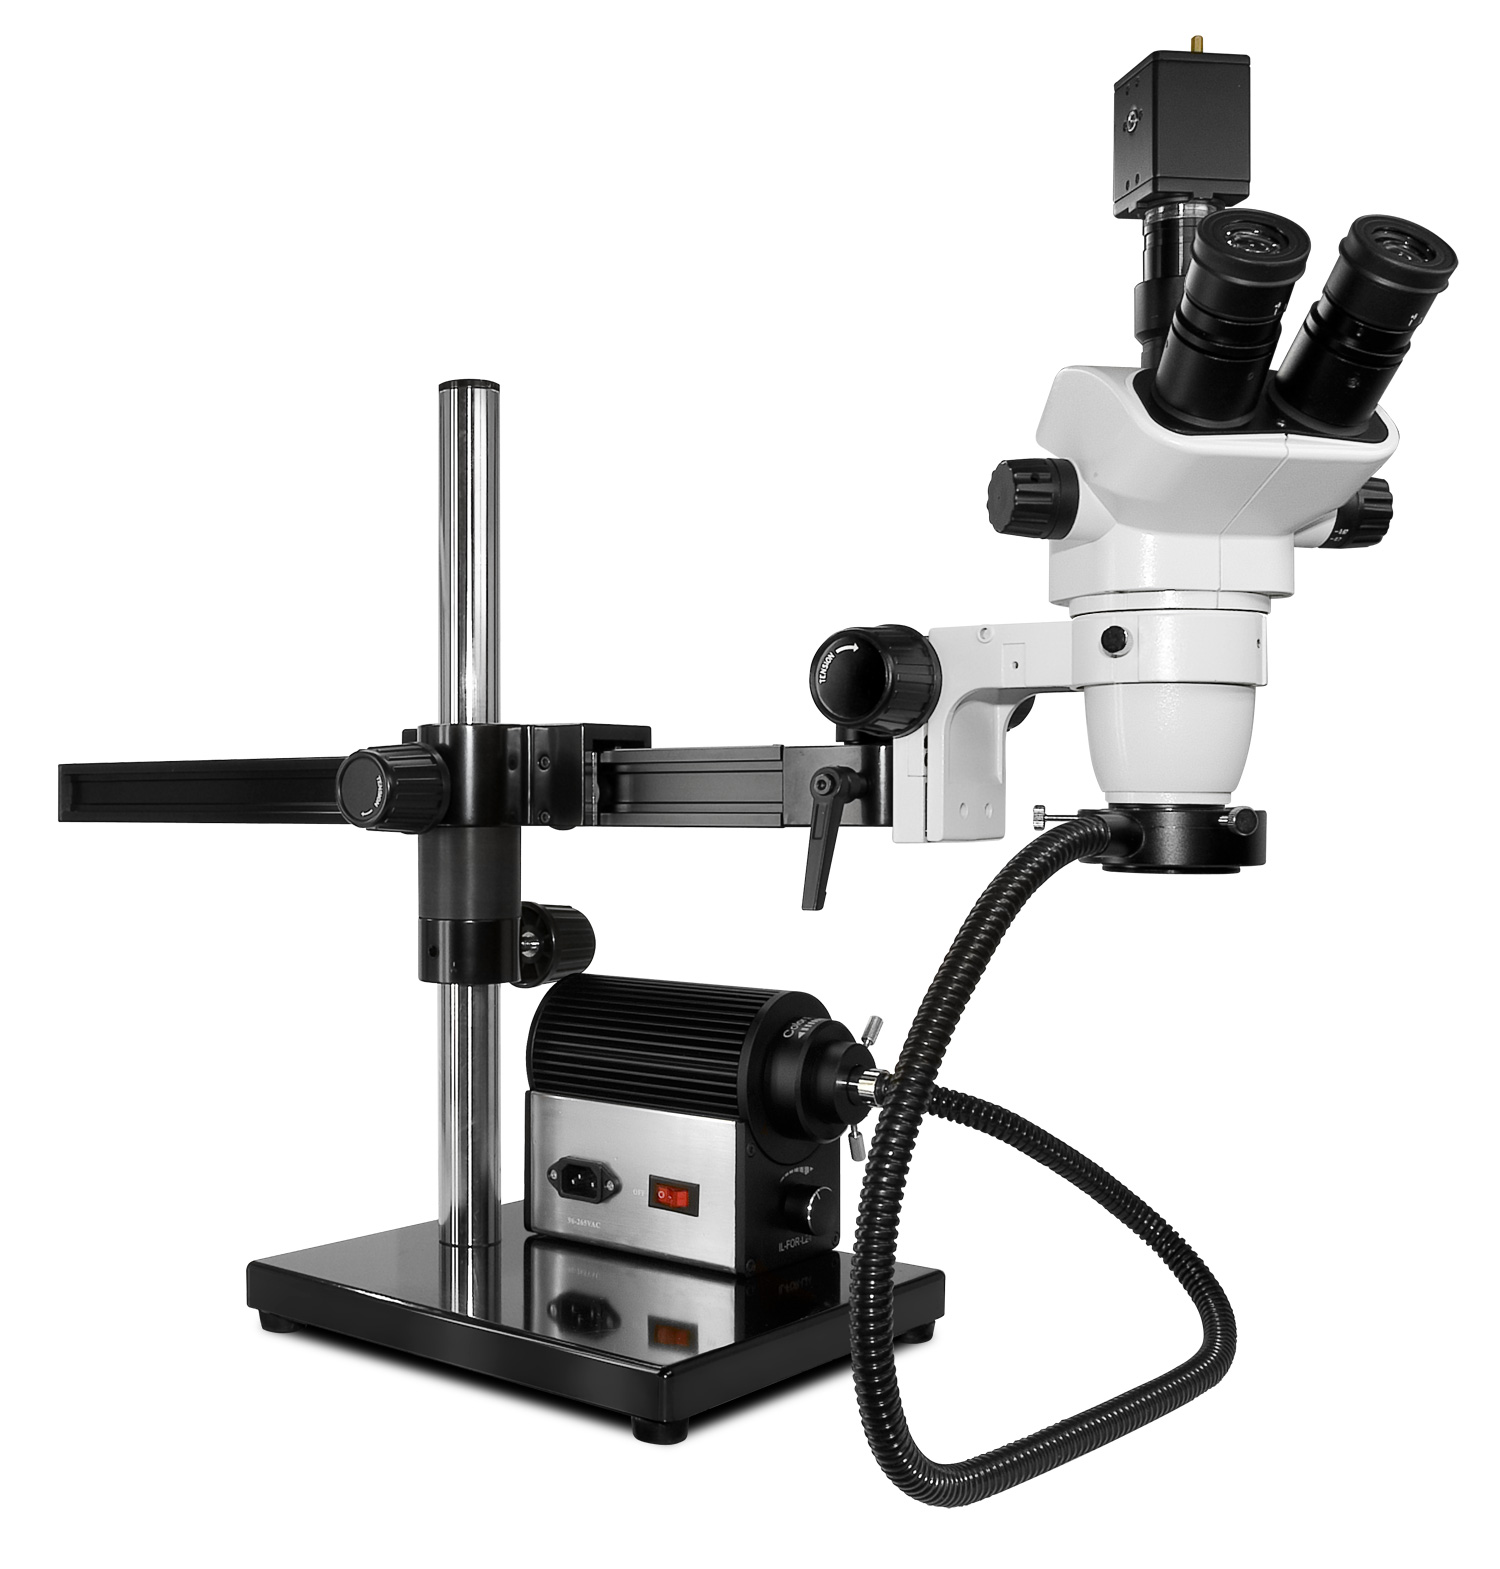 Scienscope Video Inspection Microscope-Scienscope Optical Inspection Microscopes